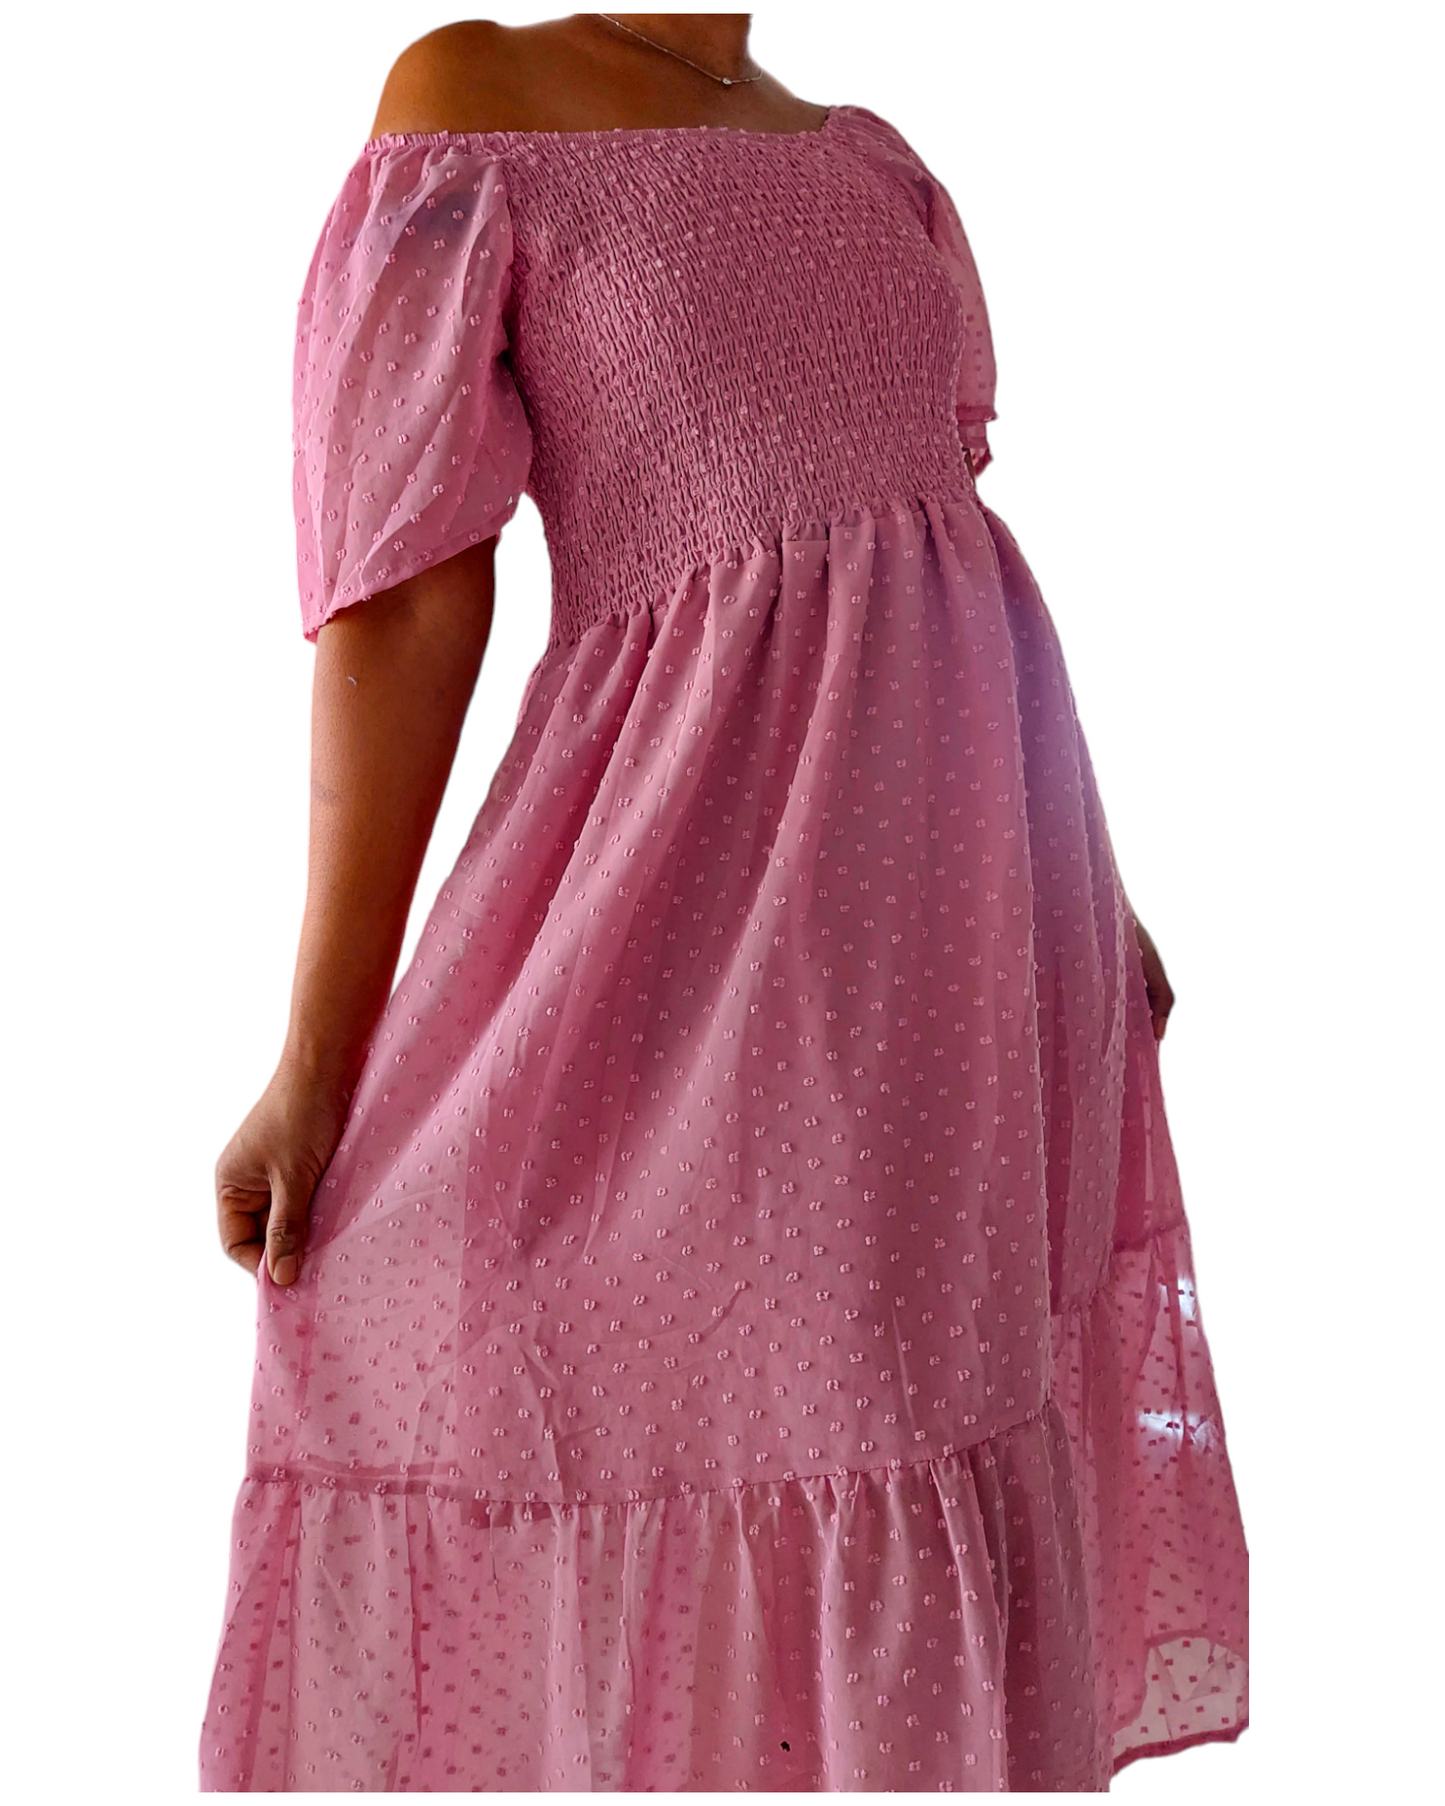 Women Tube Dress - 4123 Pink